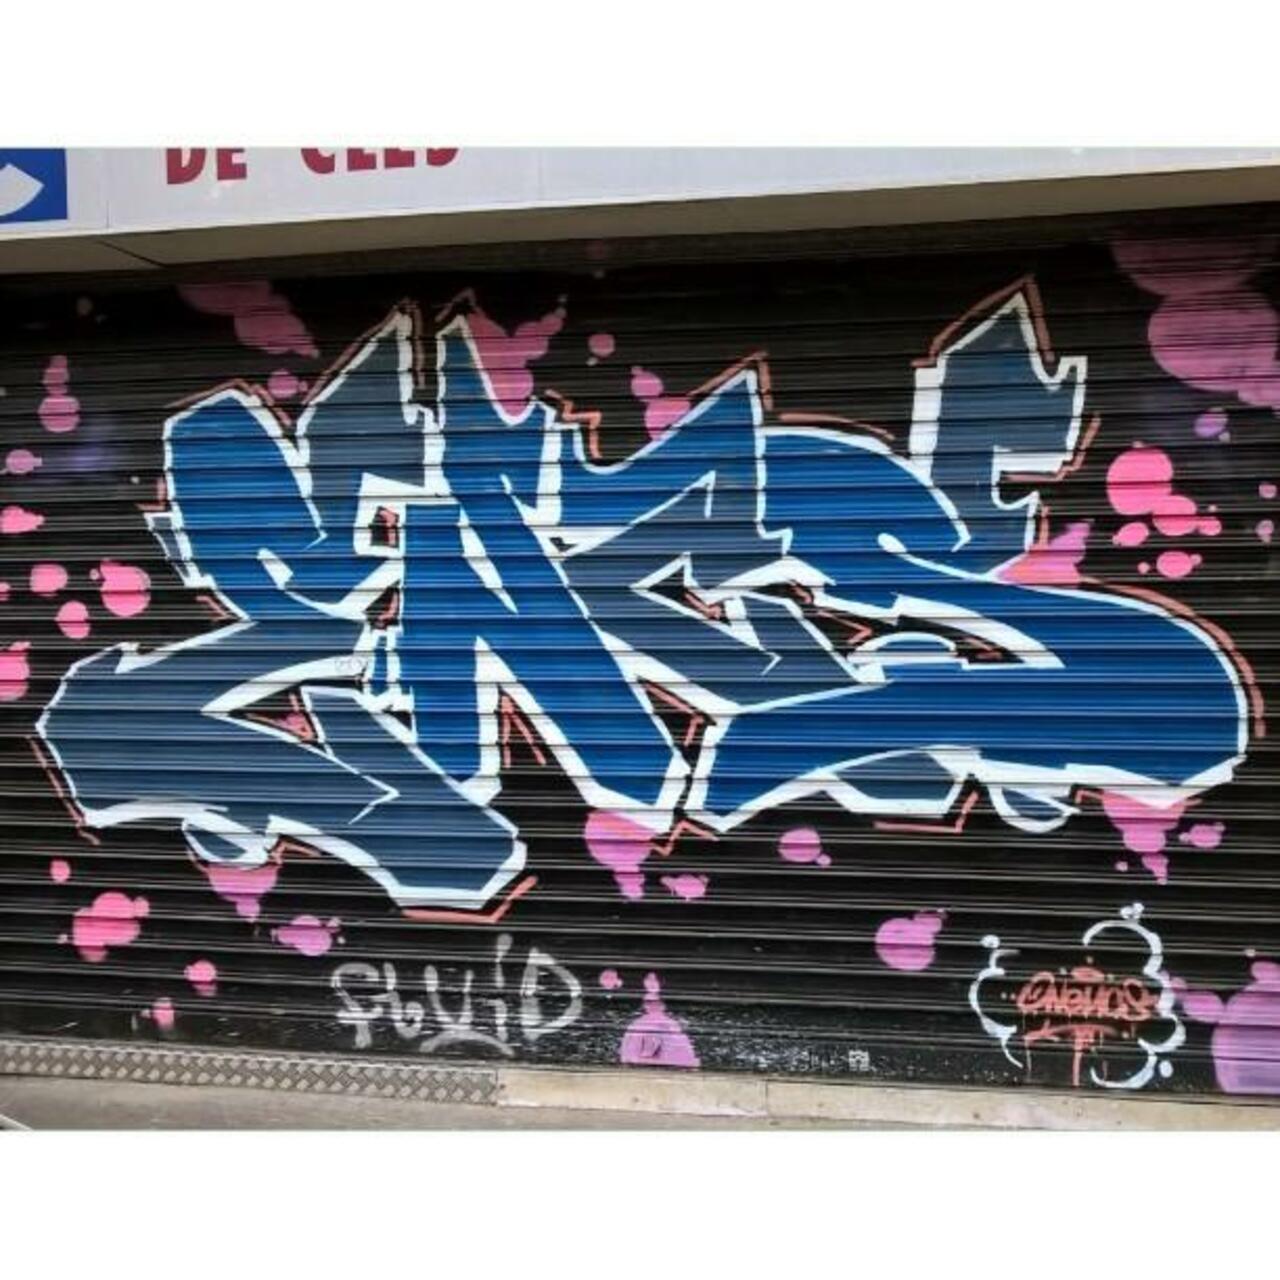 ENCS
#streetart #graffiti #graff #art #fatcap #bombing #sprayart #spraycanart #wallart #handstyle #lettering #urban… http://t.co/6SUmdODQ9a